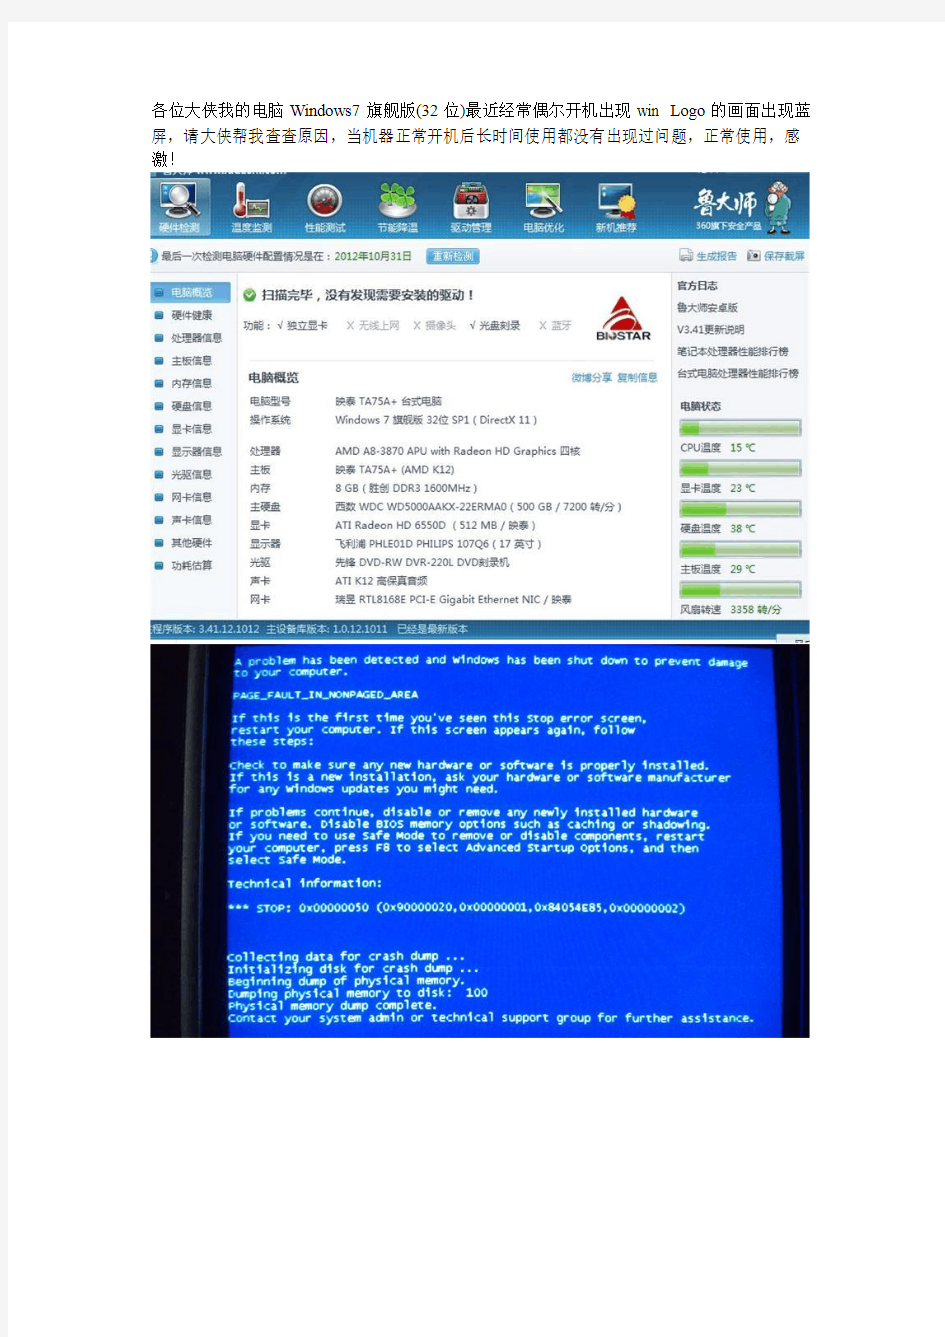 Windows7旗舰版启动蓝屏,代码0x00000050,求解决方法